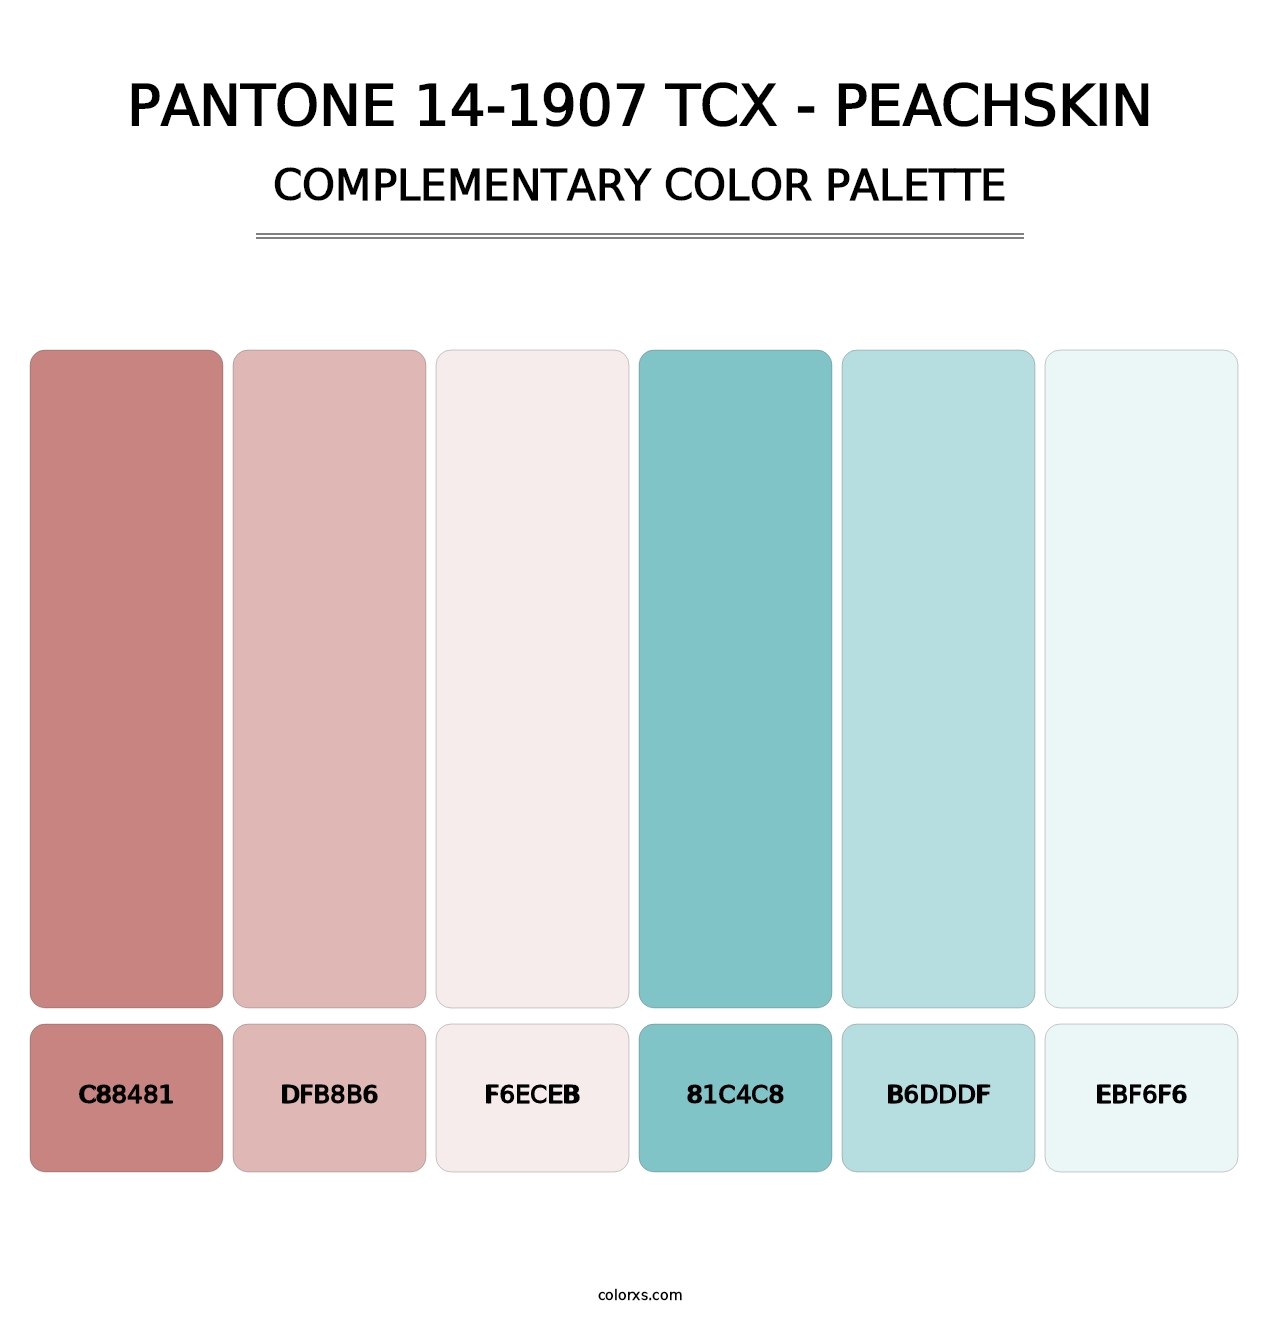 PANTONE 14-1907 TCX - Peachskin - Complementary Color Palette